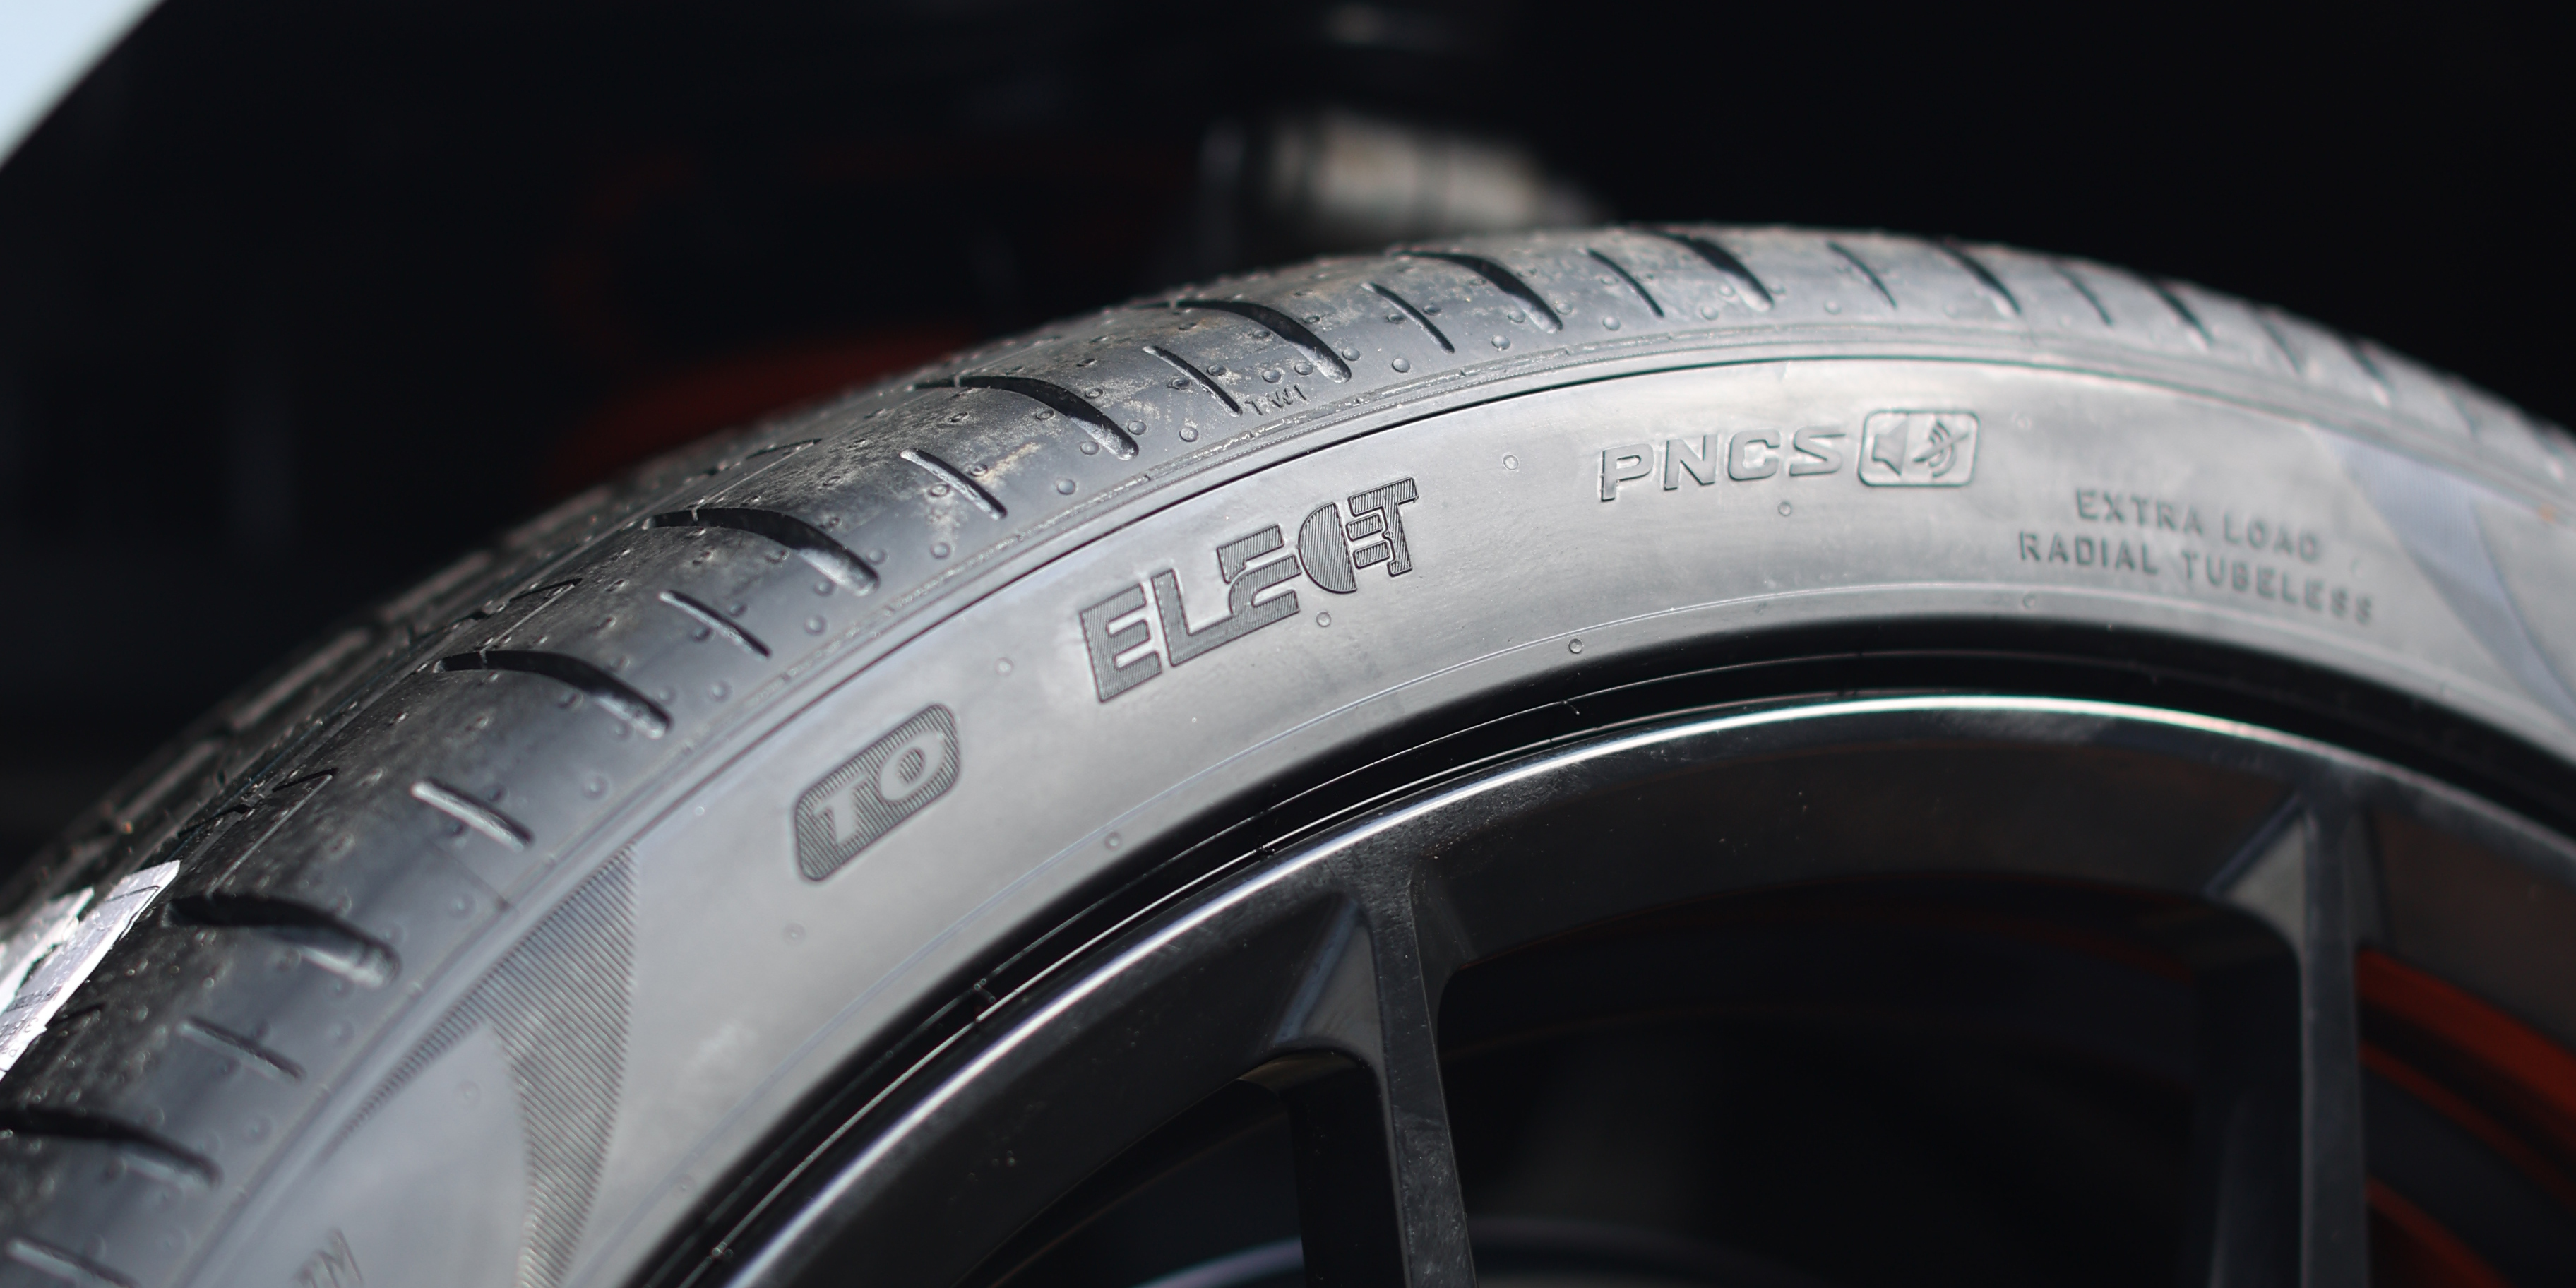 Pirelli tyre sidewall showing EV specific branding logos.